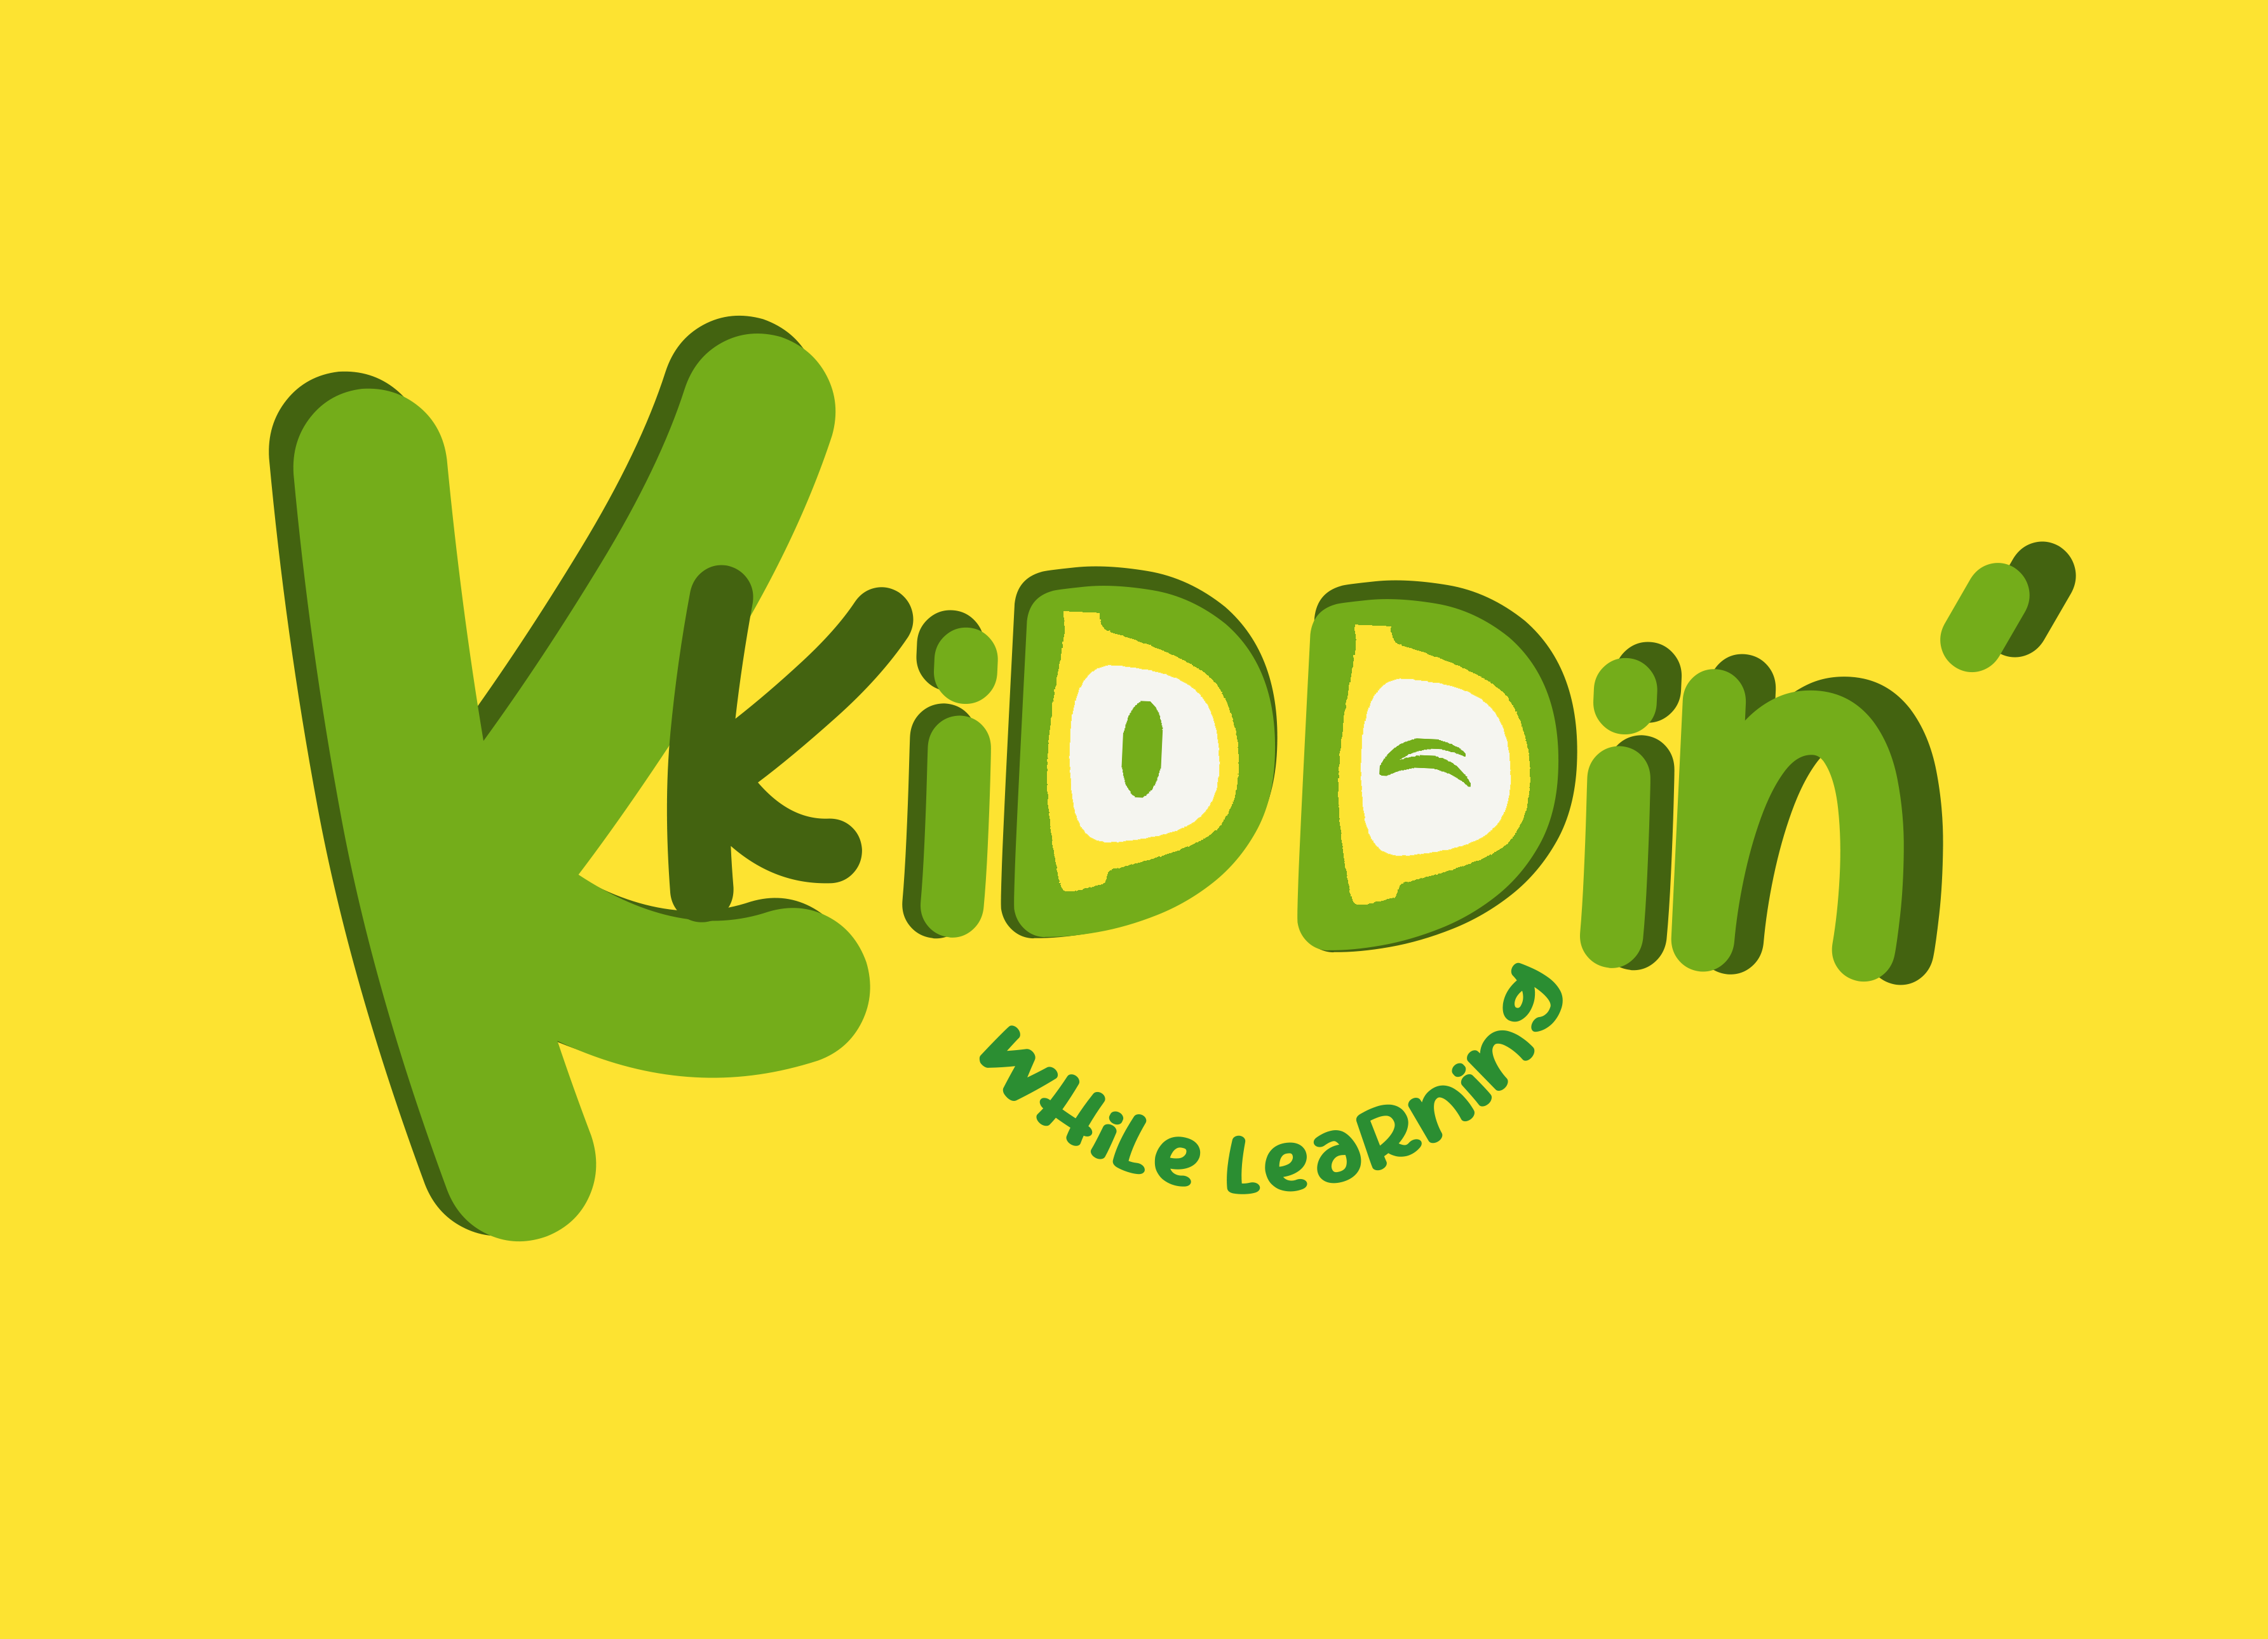 Kkiddin' Logo